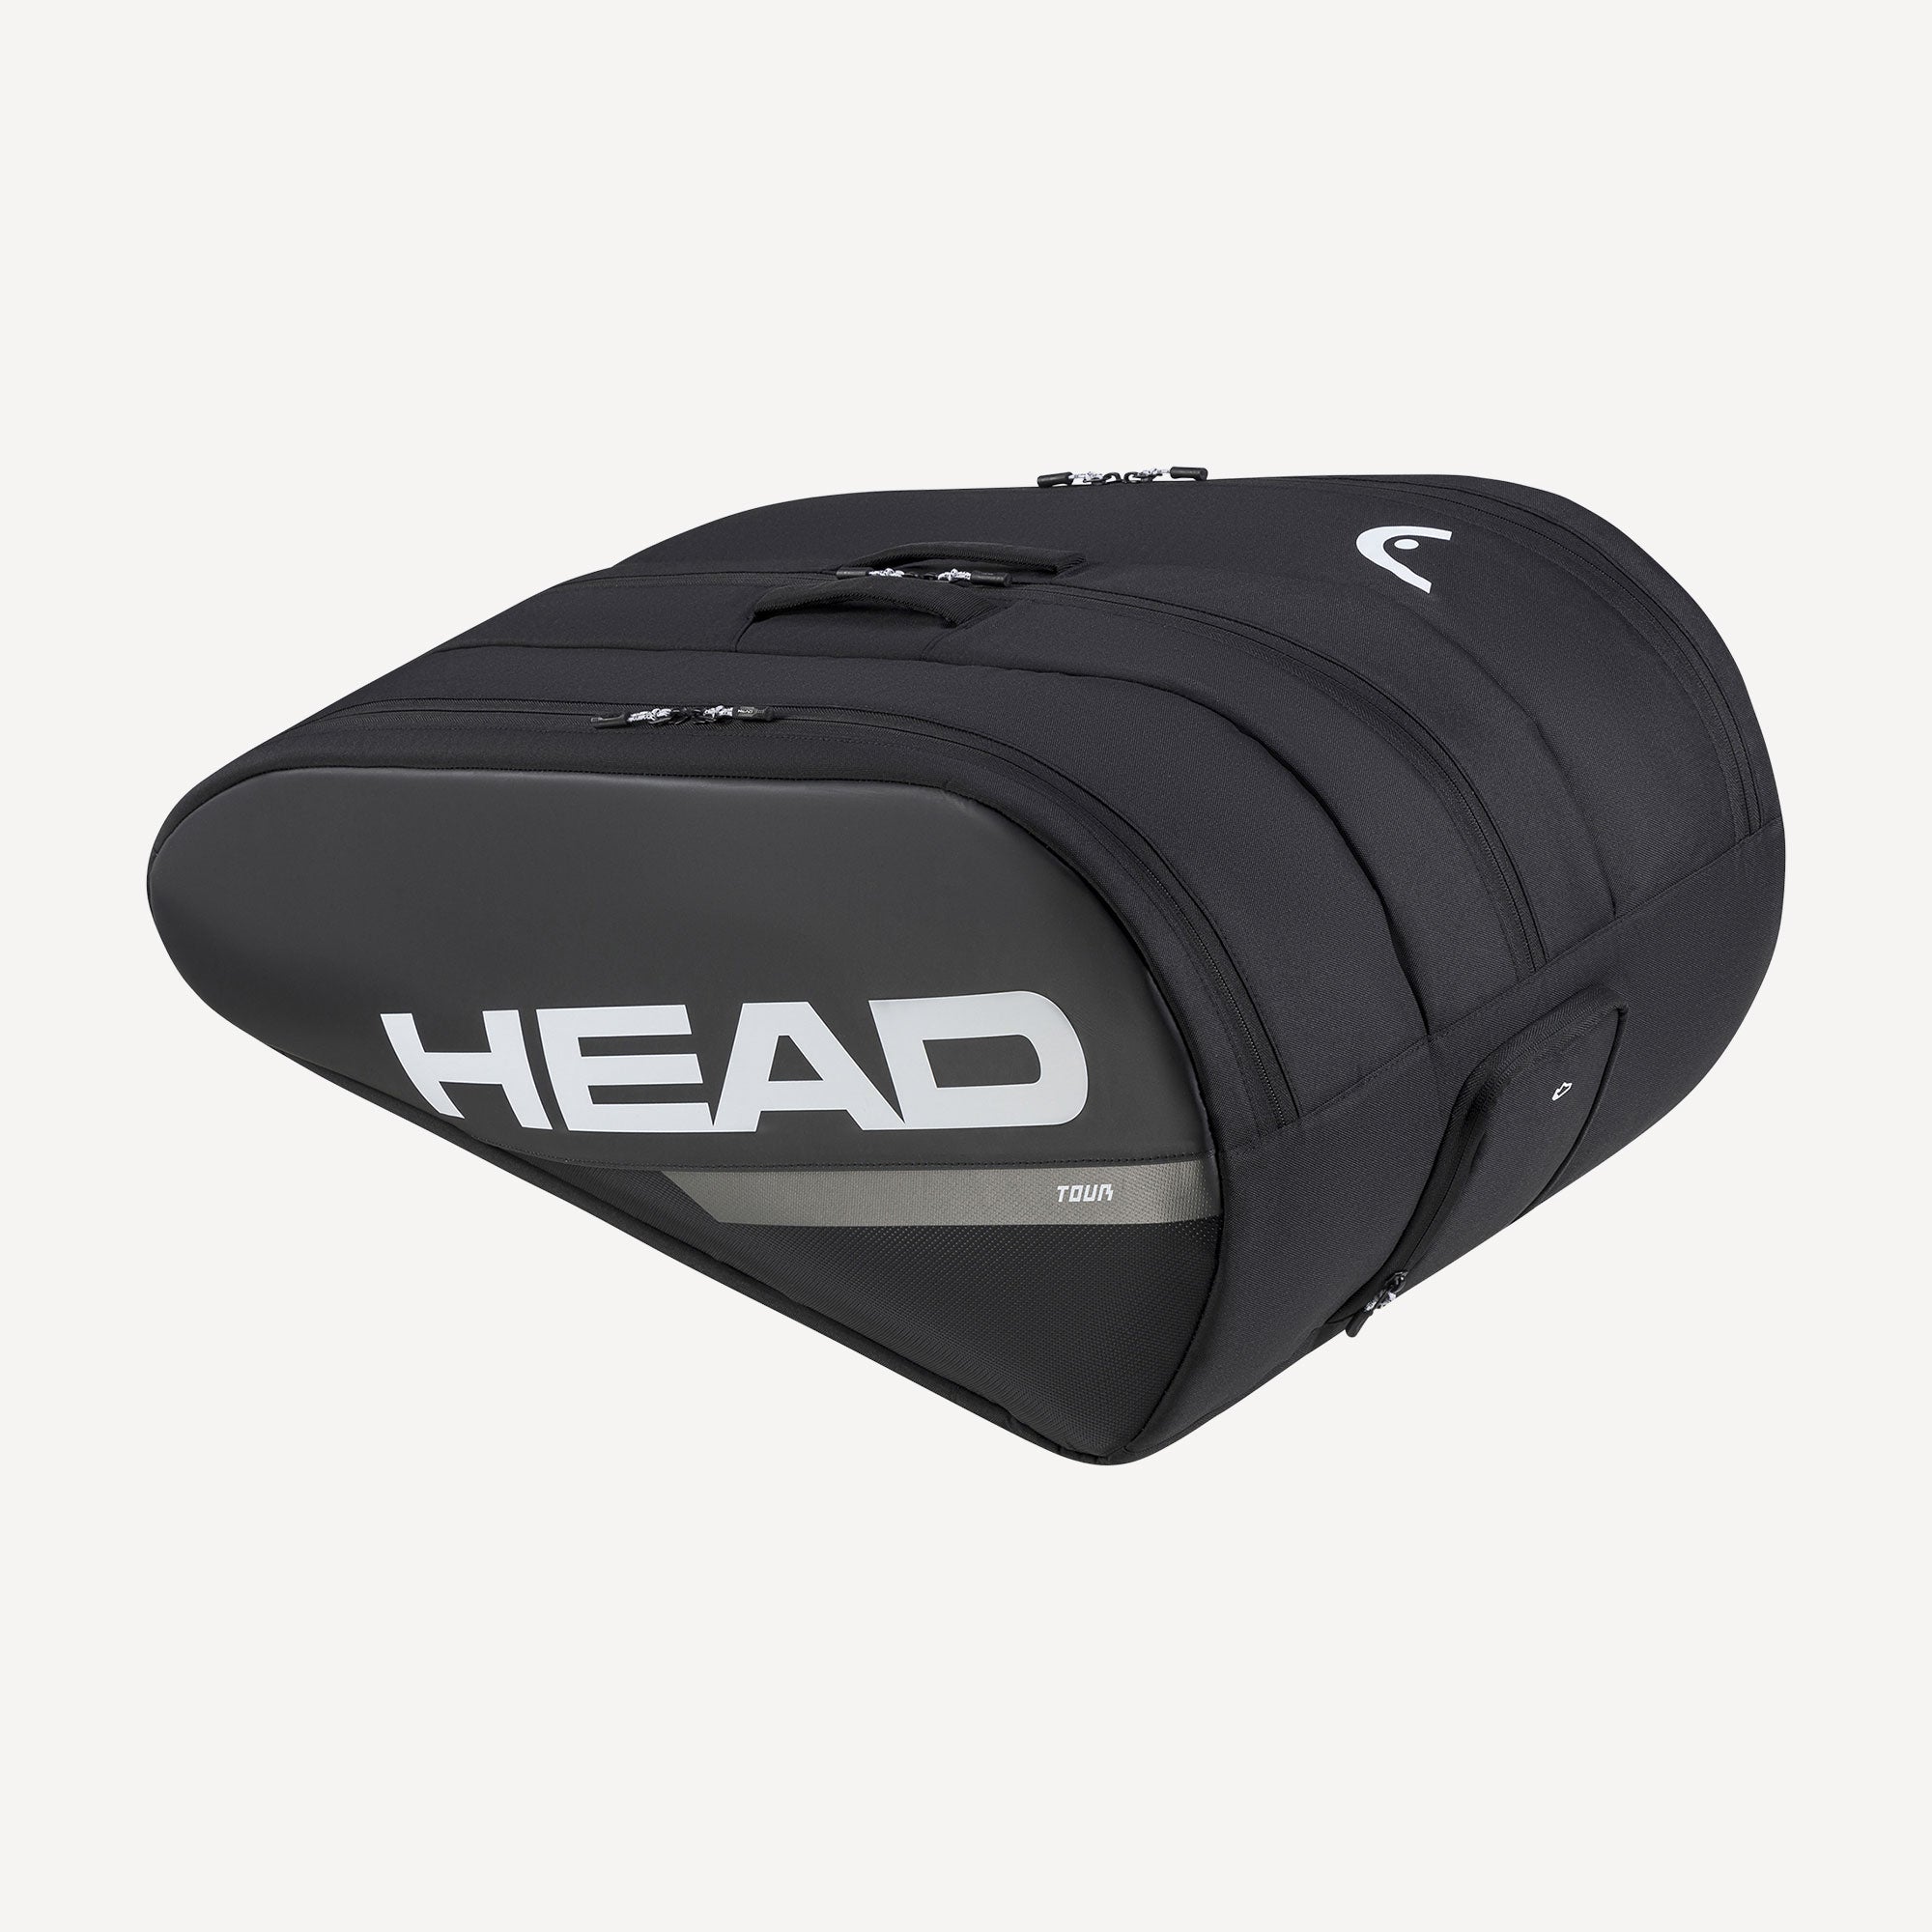 HEAD Tour Racket Tennis Bag XL - Black (1)